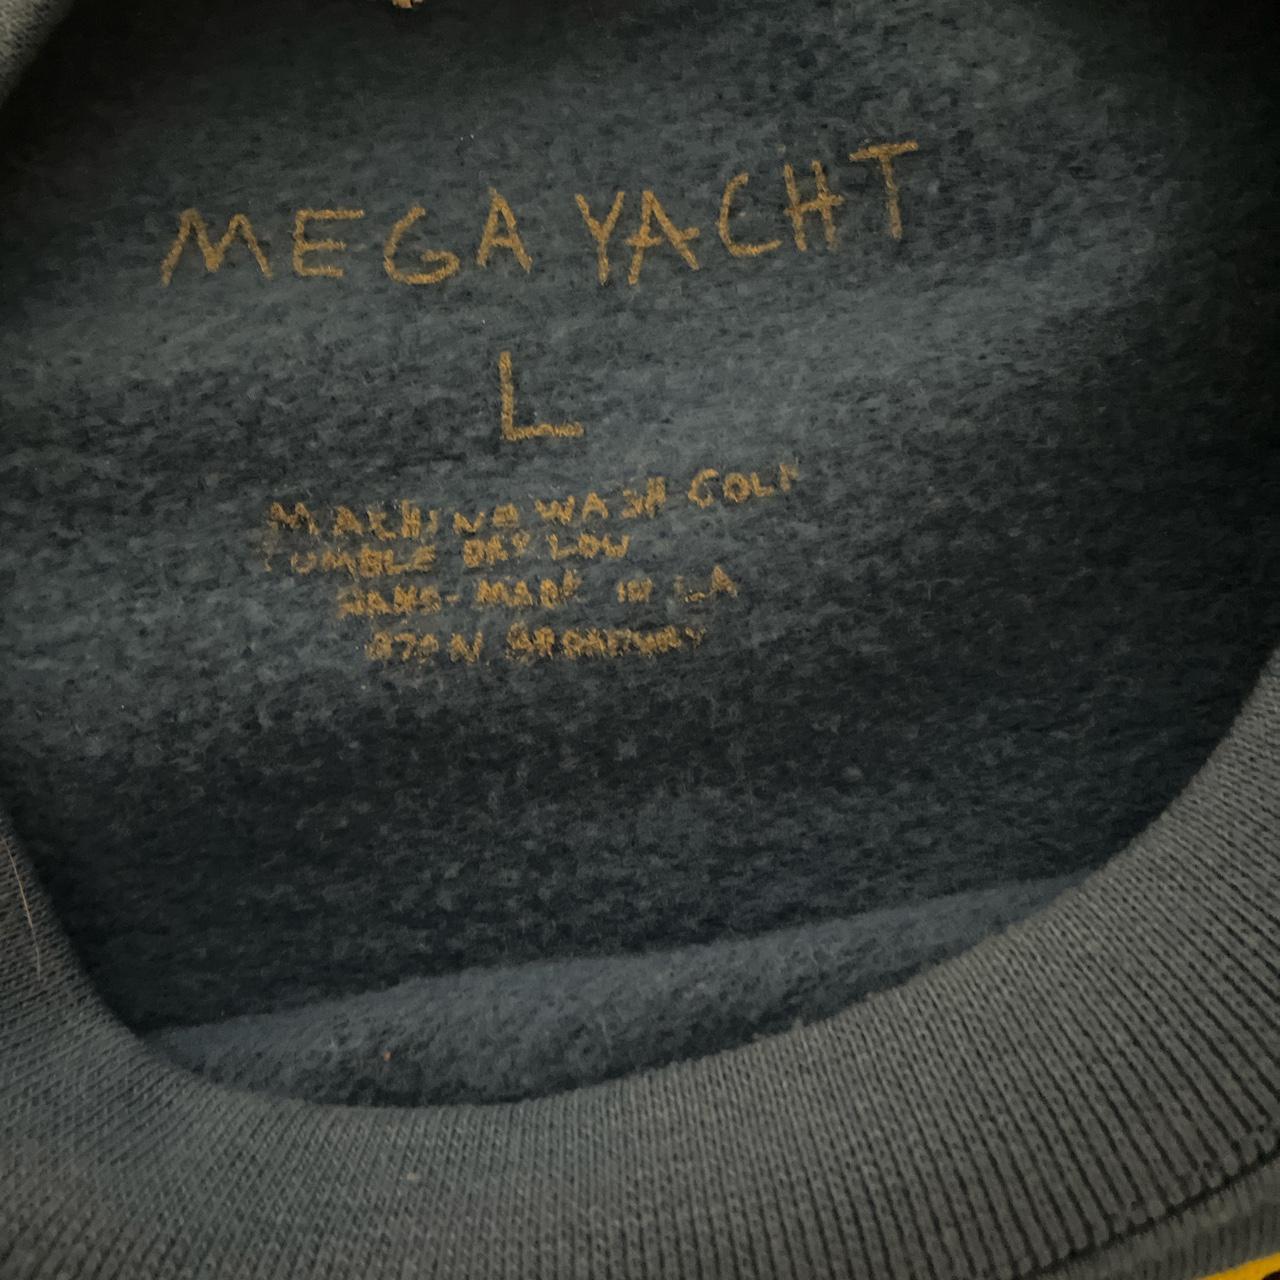 Mega Yacht Clothing History of Art crewneck. Brand - Depop